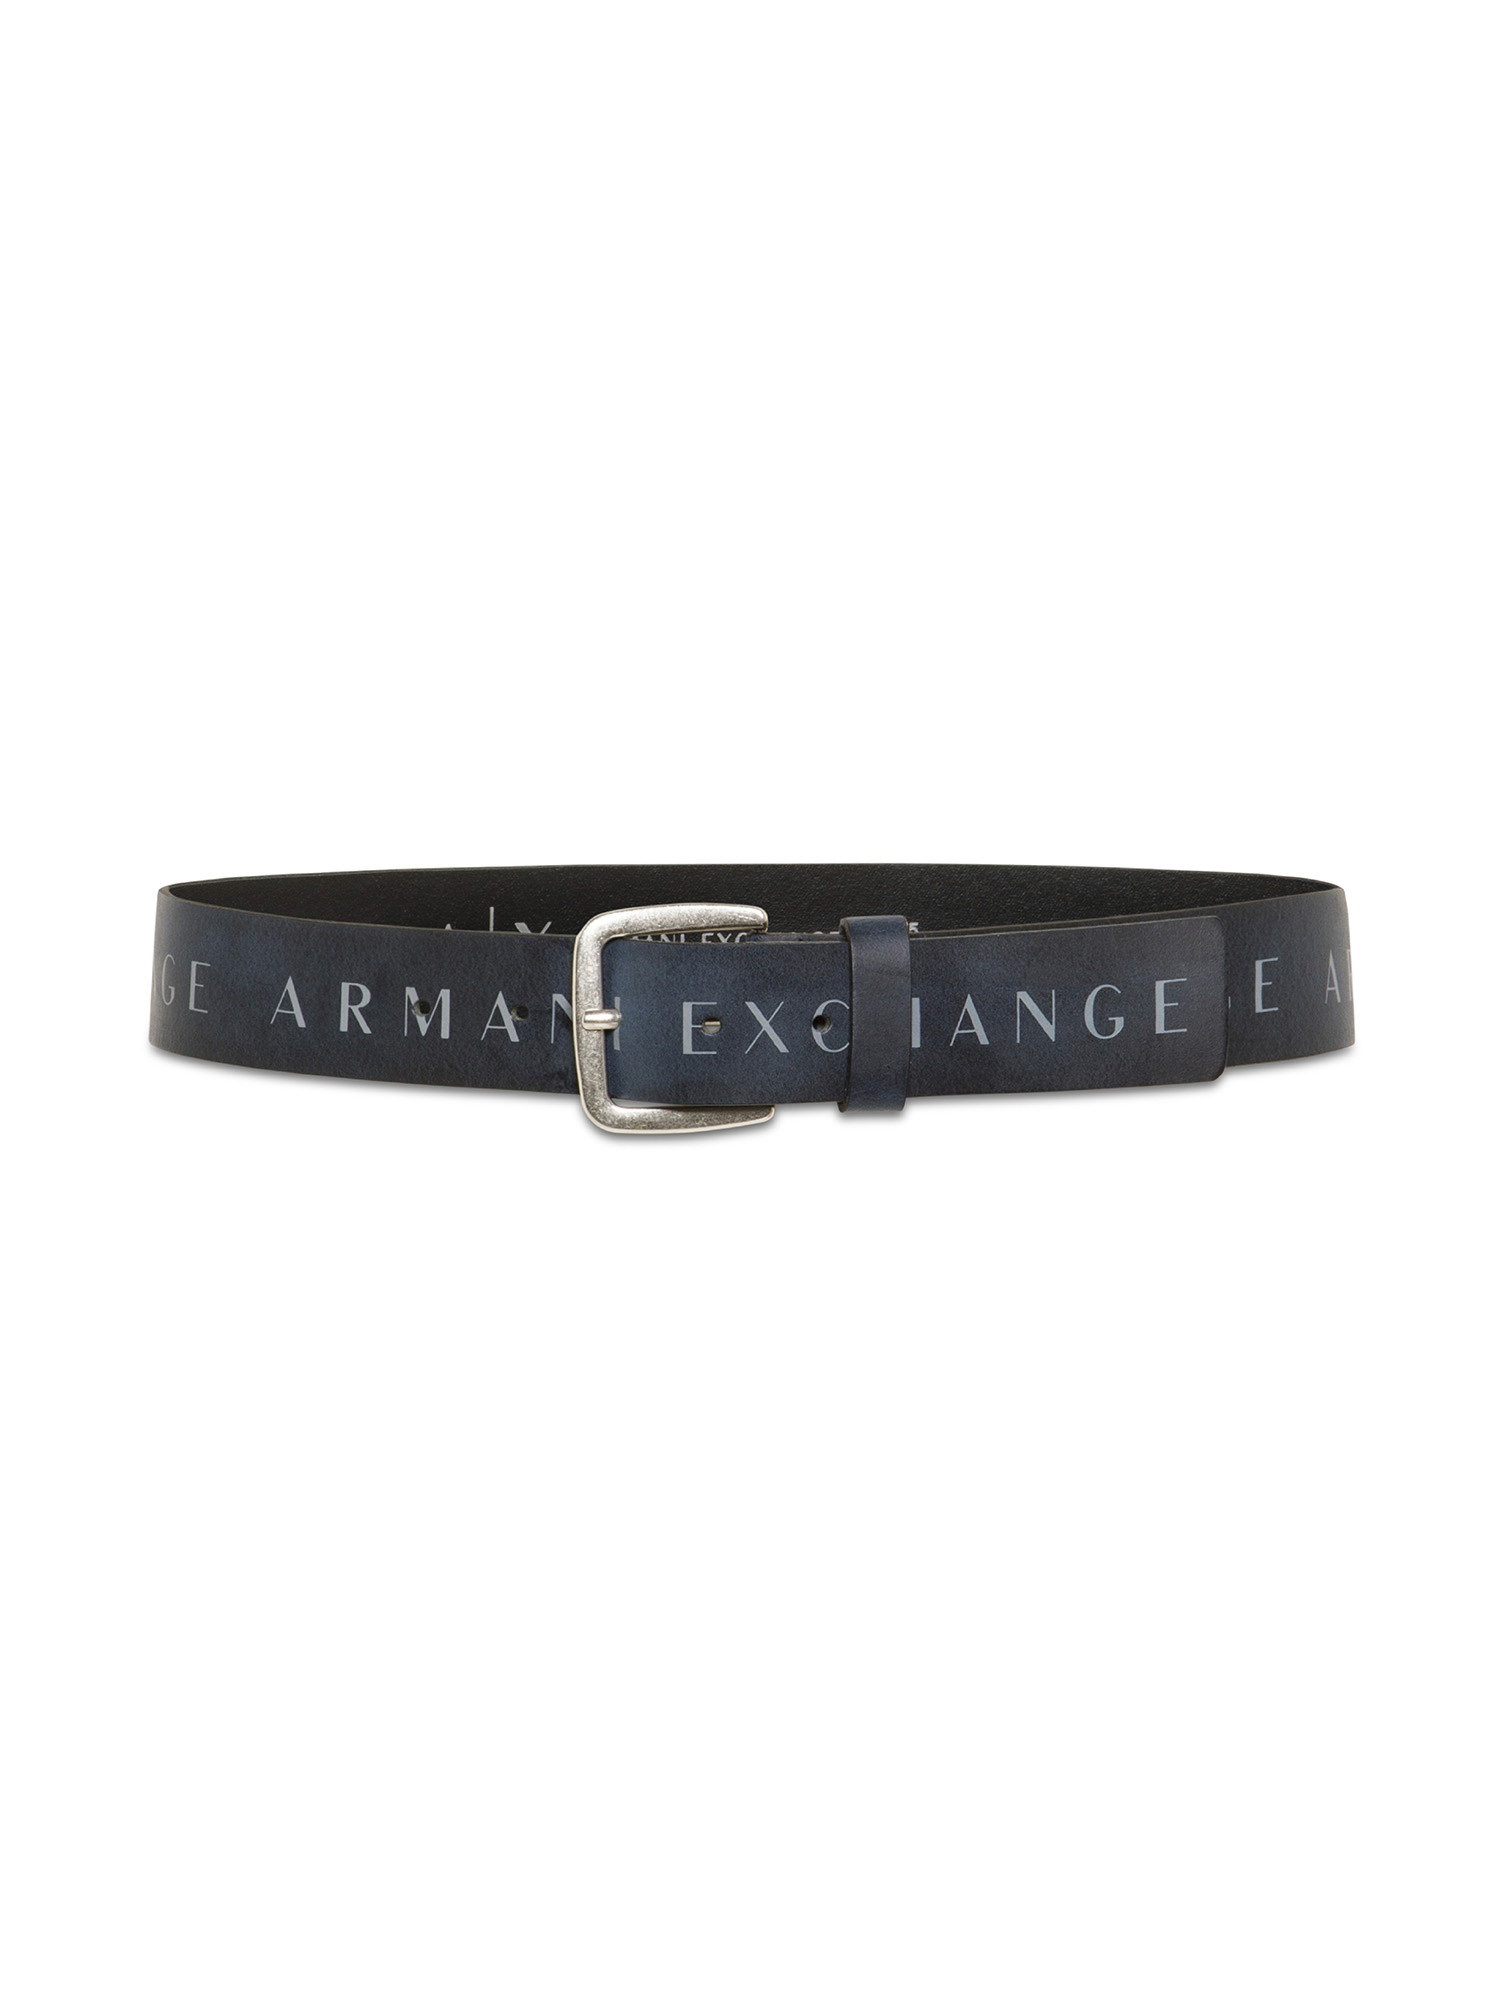 Armani Exchange - Leather belt with printed logo, Dark Blue, large image number 1